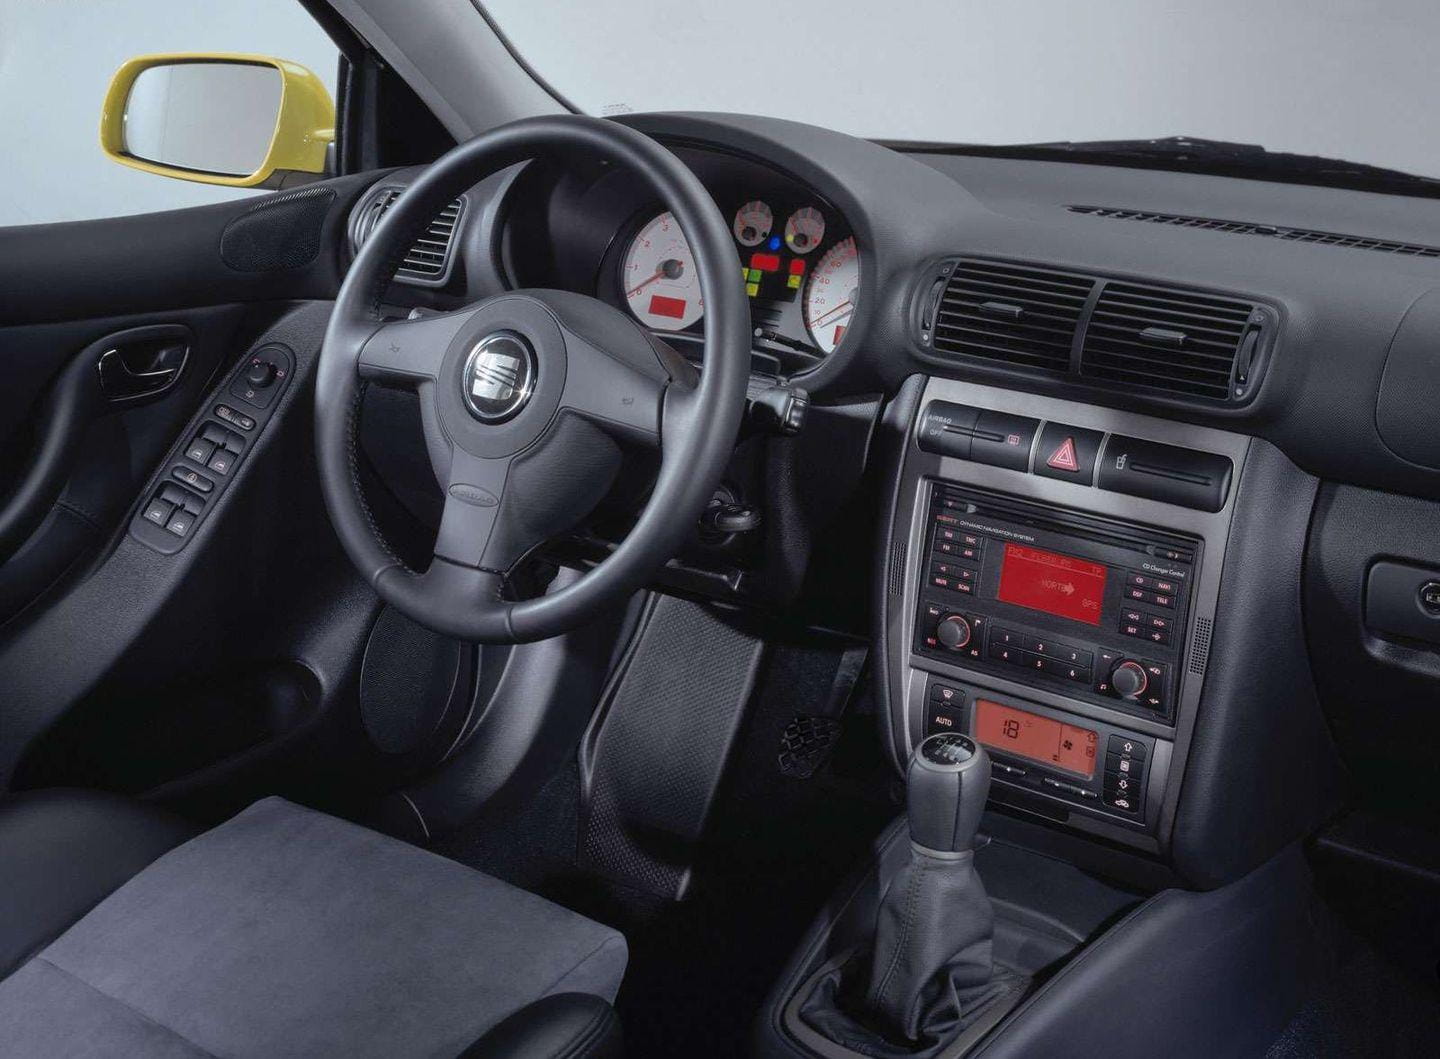 seat-leon-mk1-interior